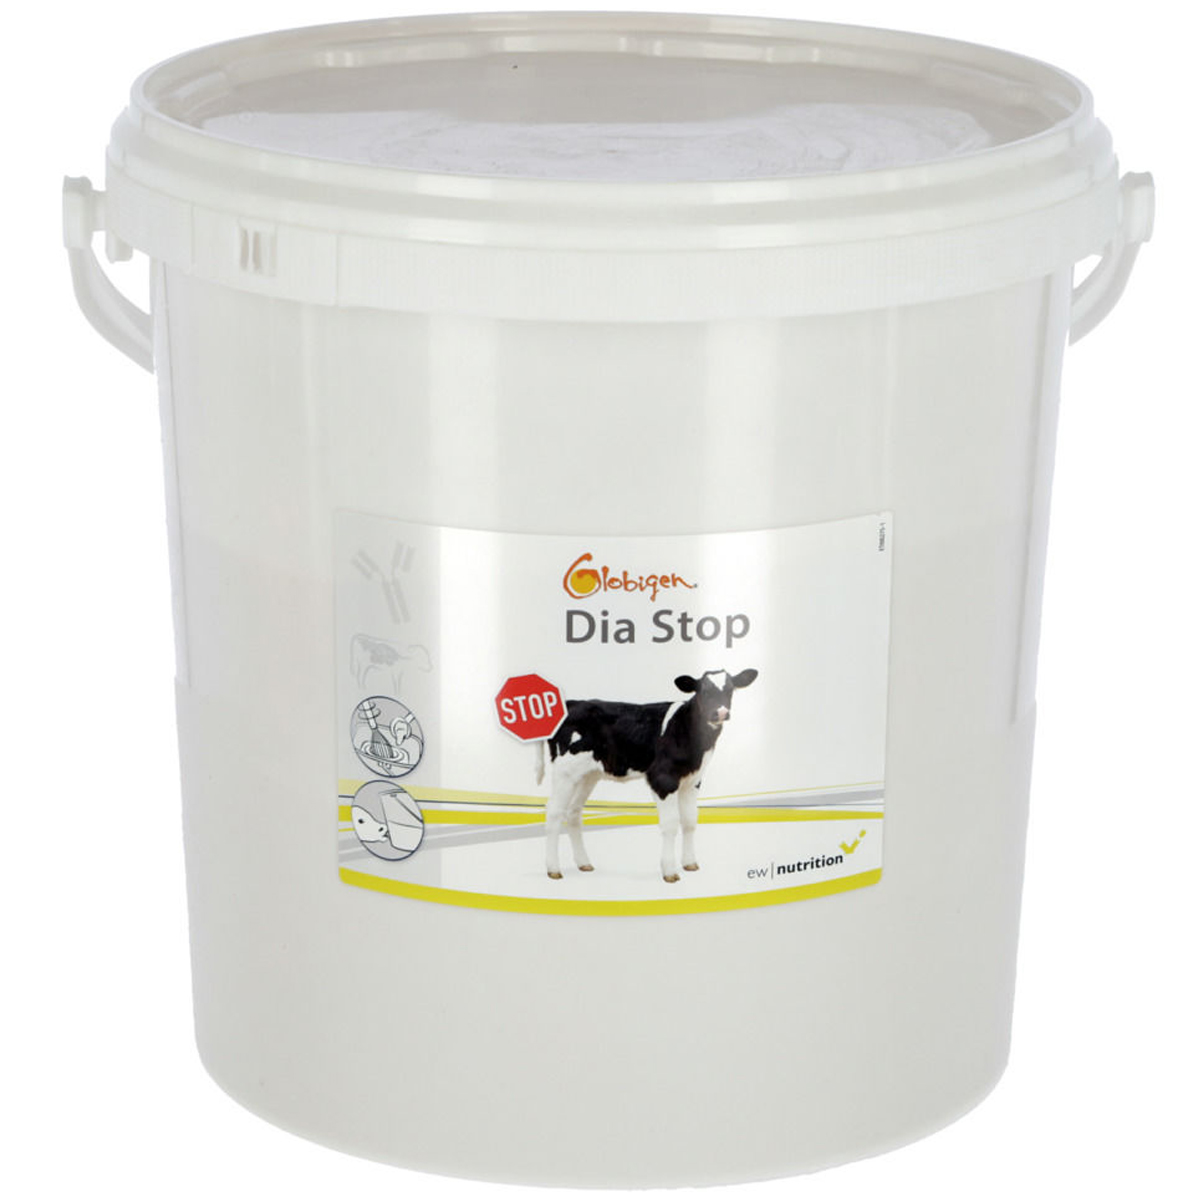 Globigen Dia Stop integratore dietetico per vitelli